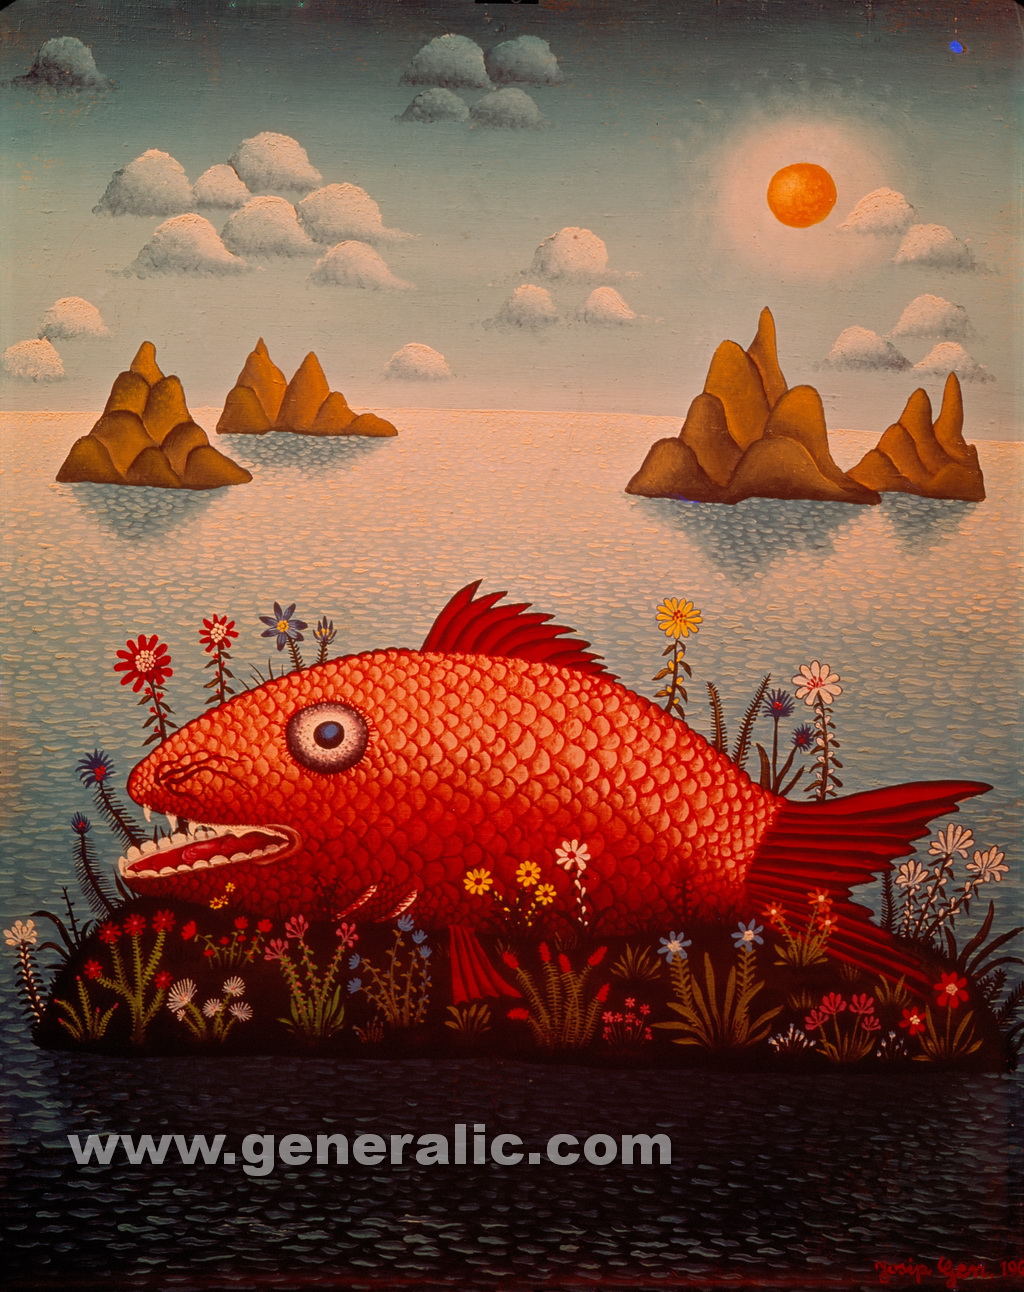 Josip Generalic, 1969, Red fish, oil on canvas